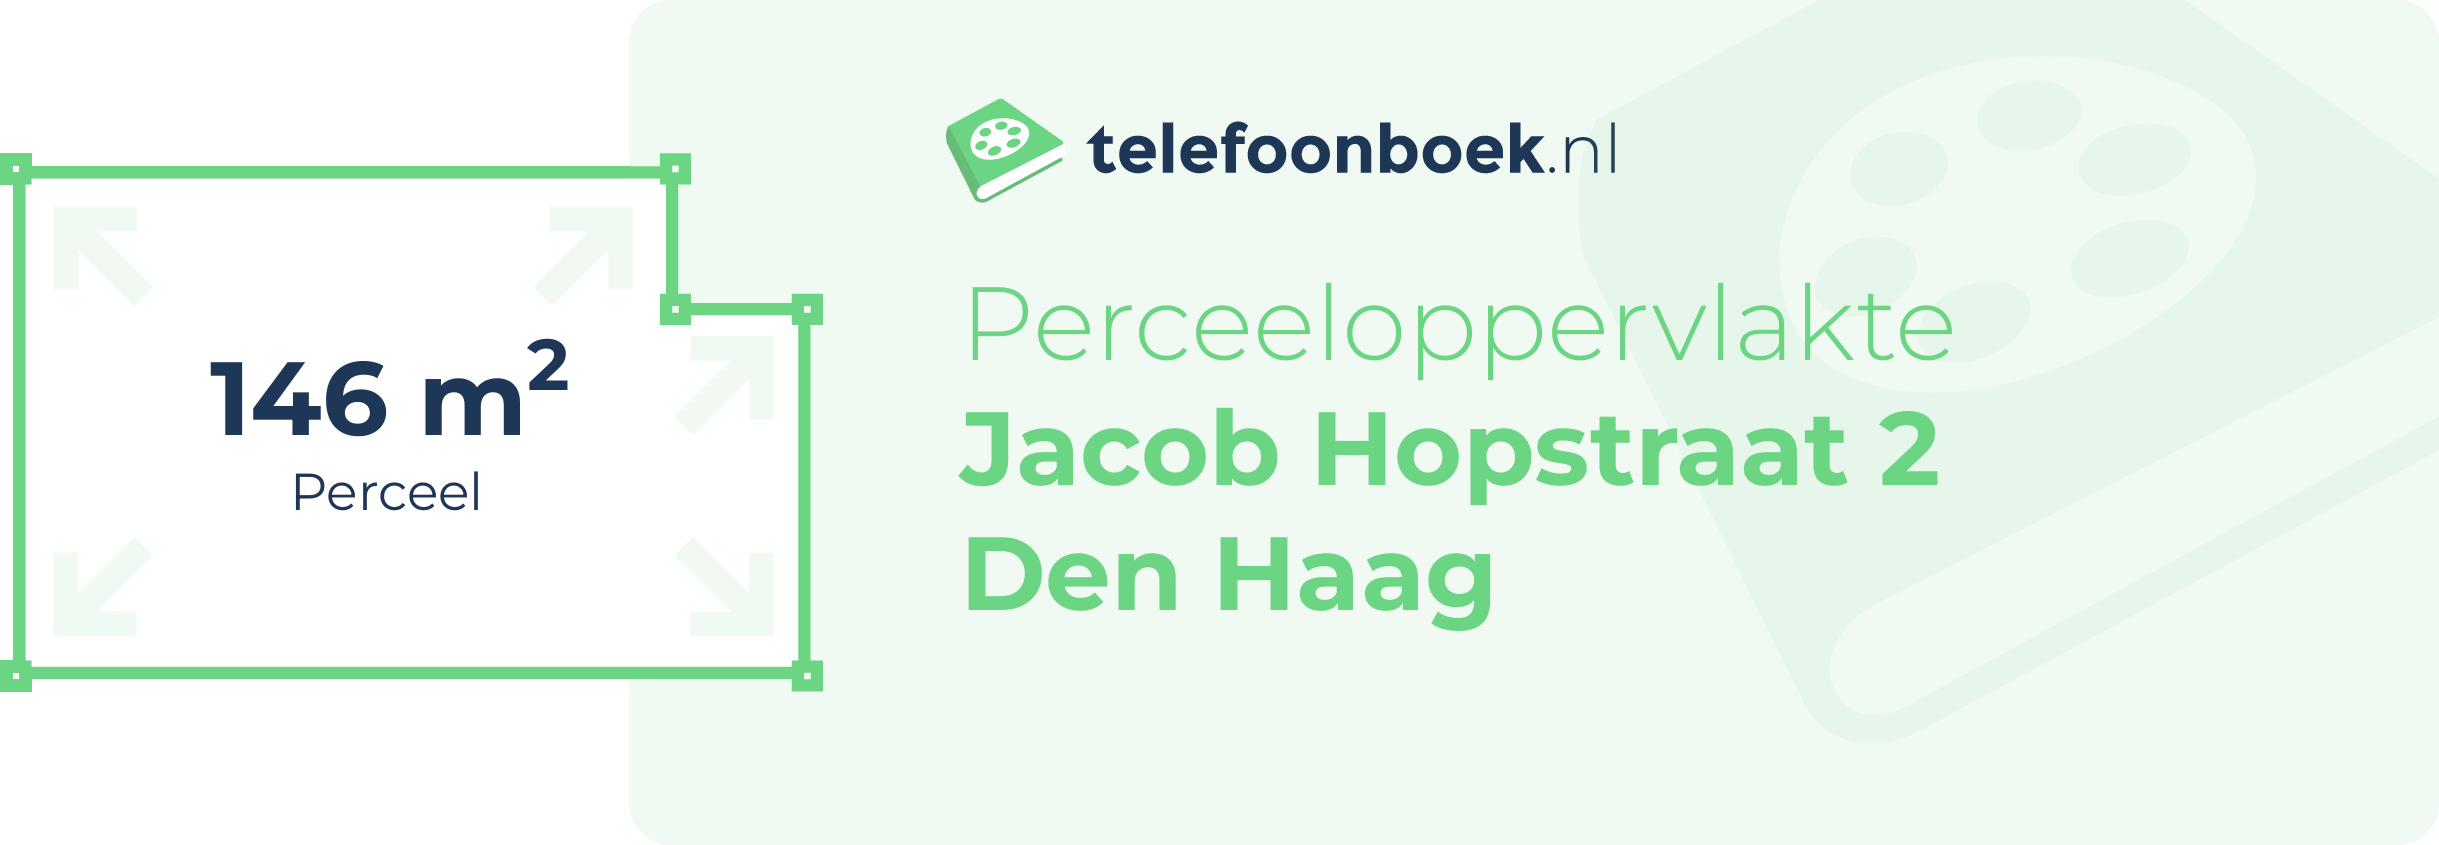 Perceeloppervlakte Jacob Hopstraat 2 Den Haag